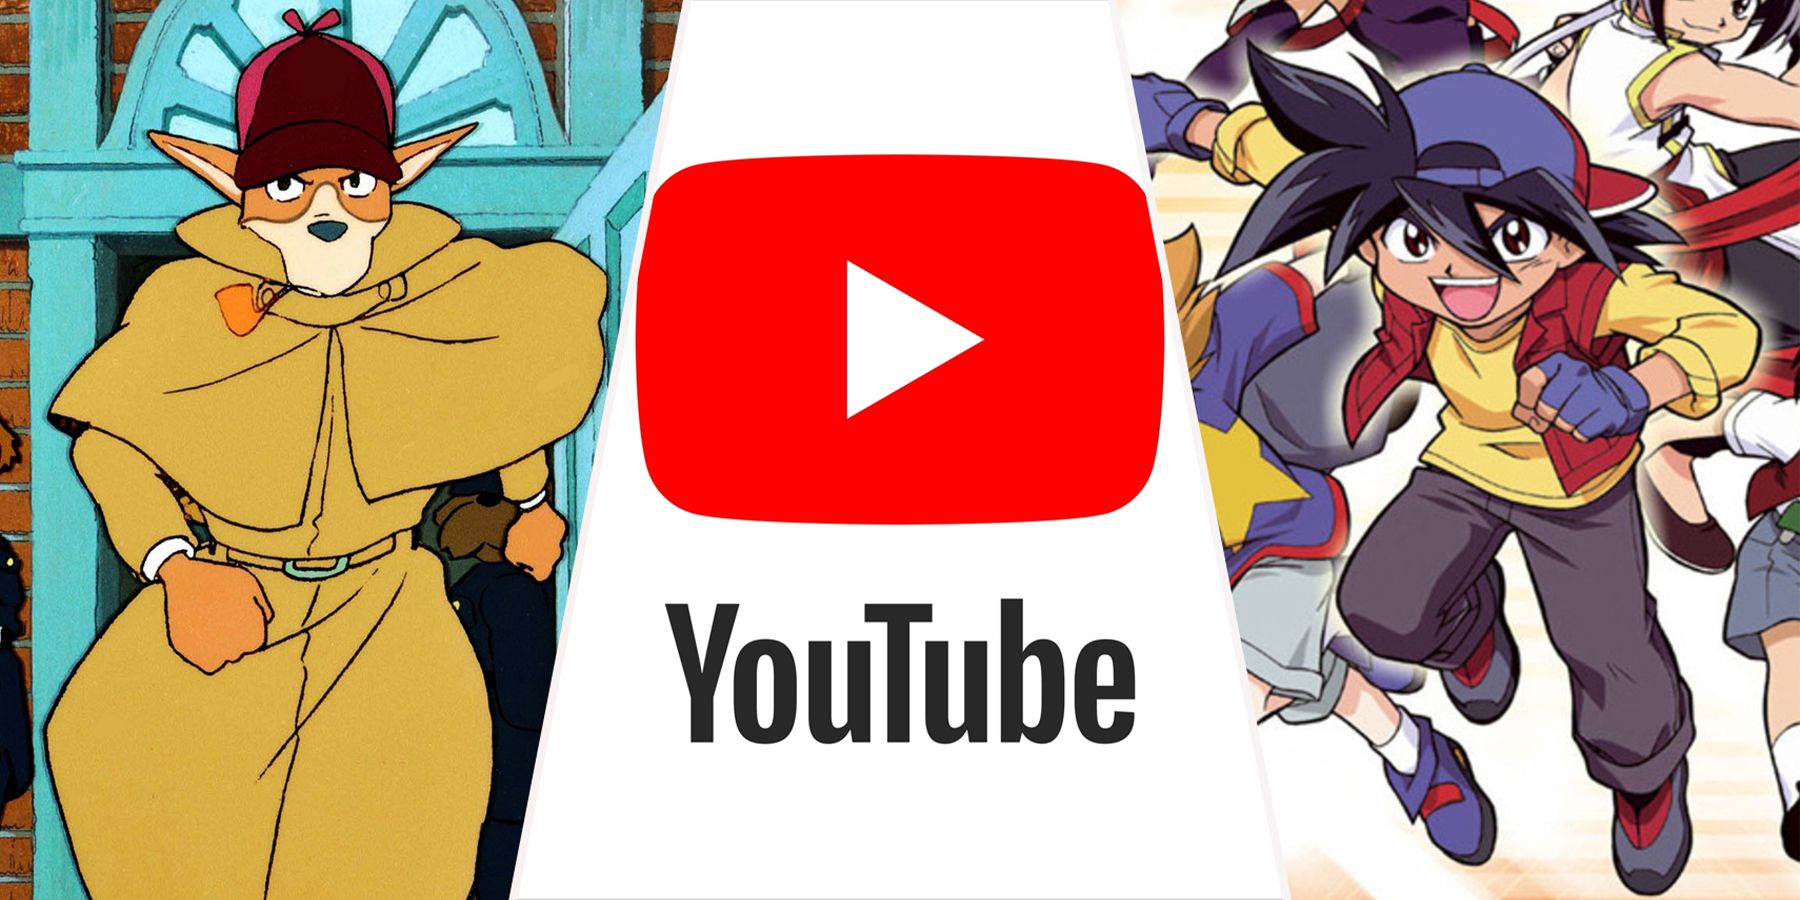 youtube anime gratis beyblade sherlock hound